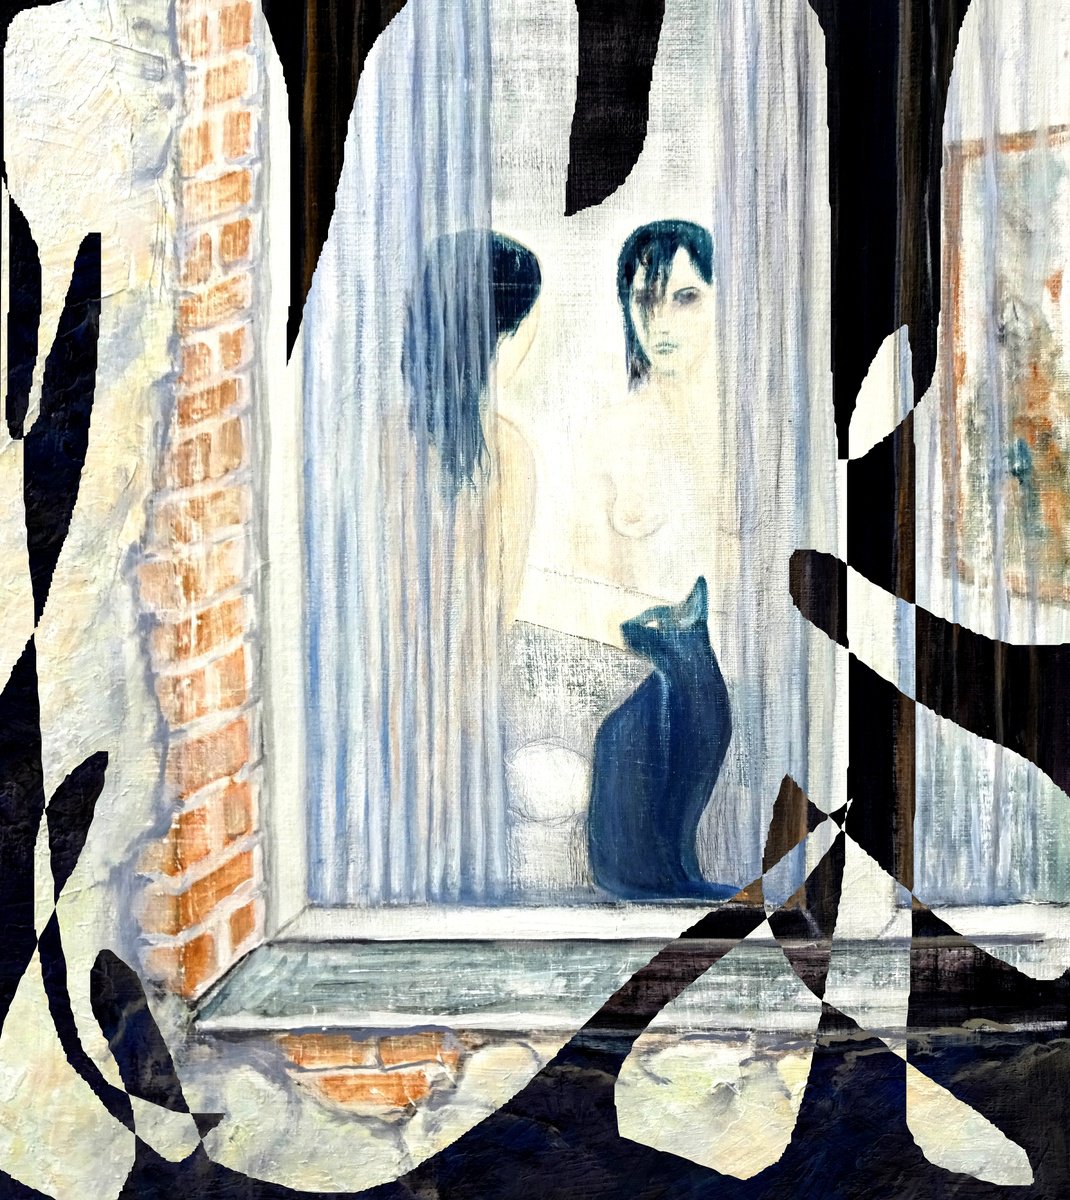 Series Blue Lady, Black Cat #3 by Volker Mayr